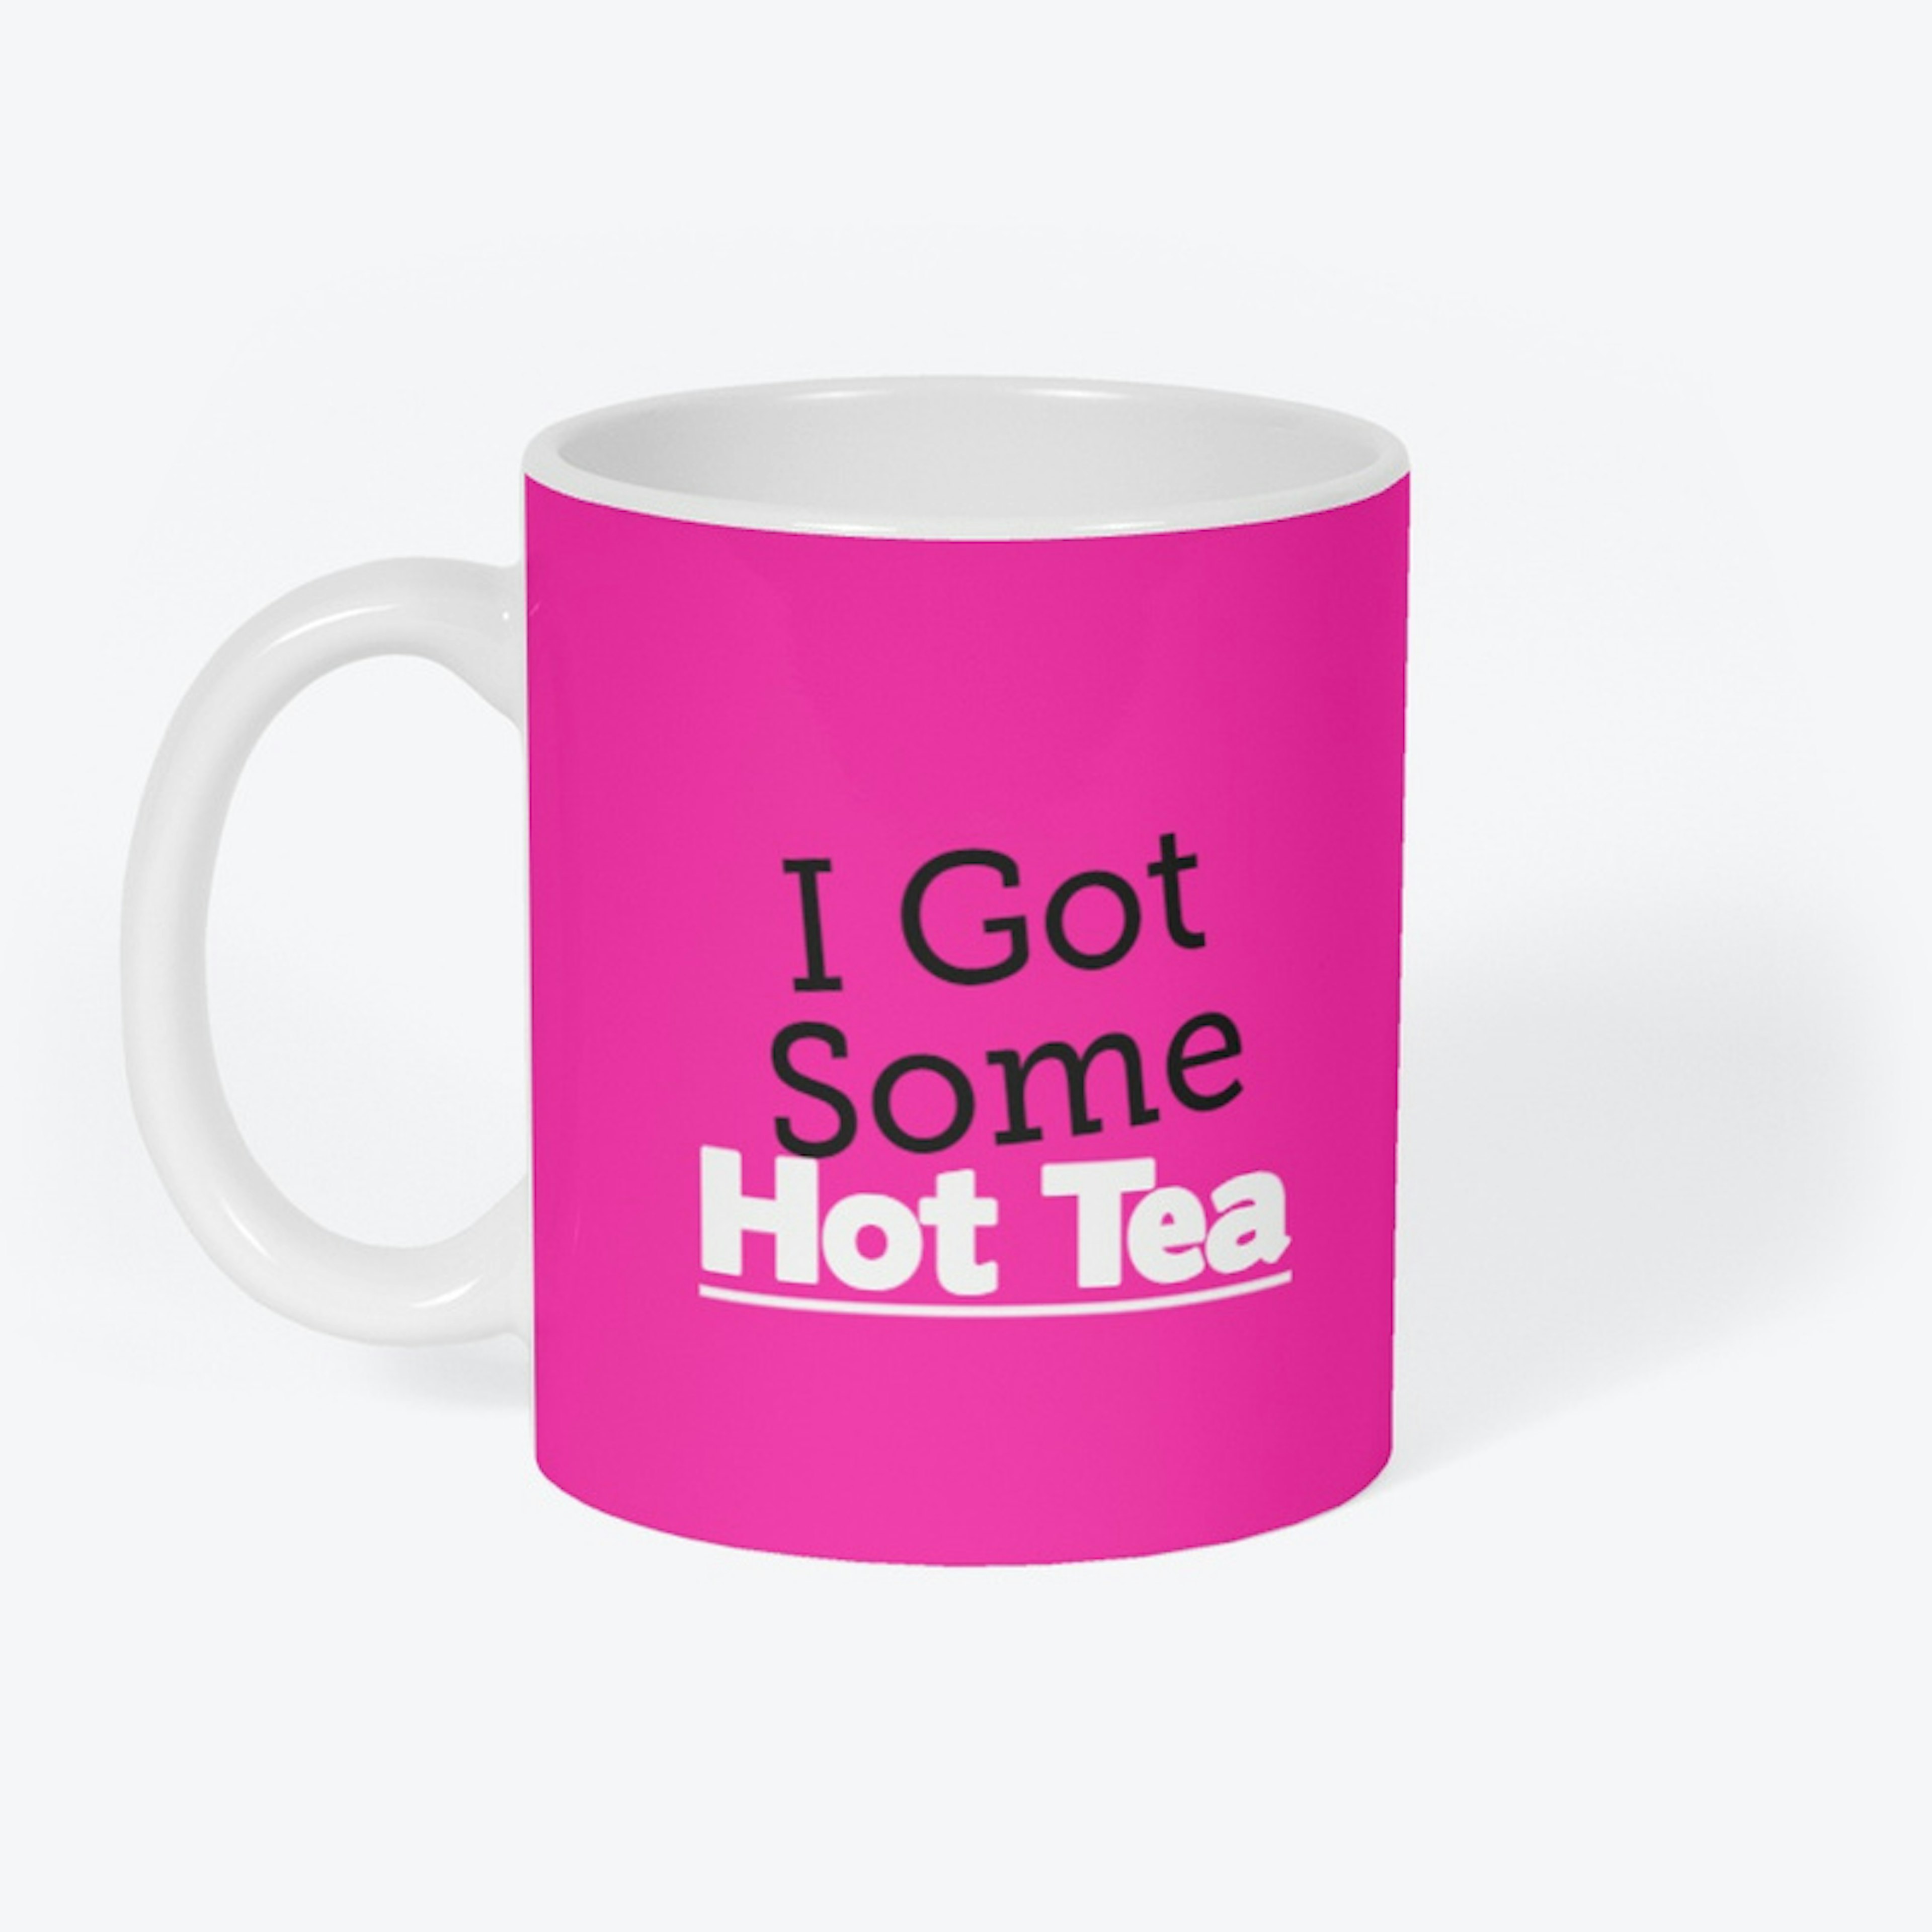 Got hot tea mug 